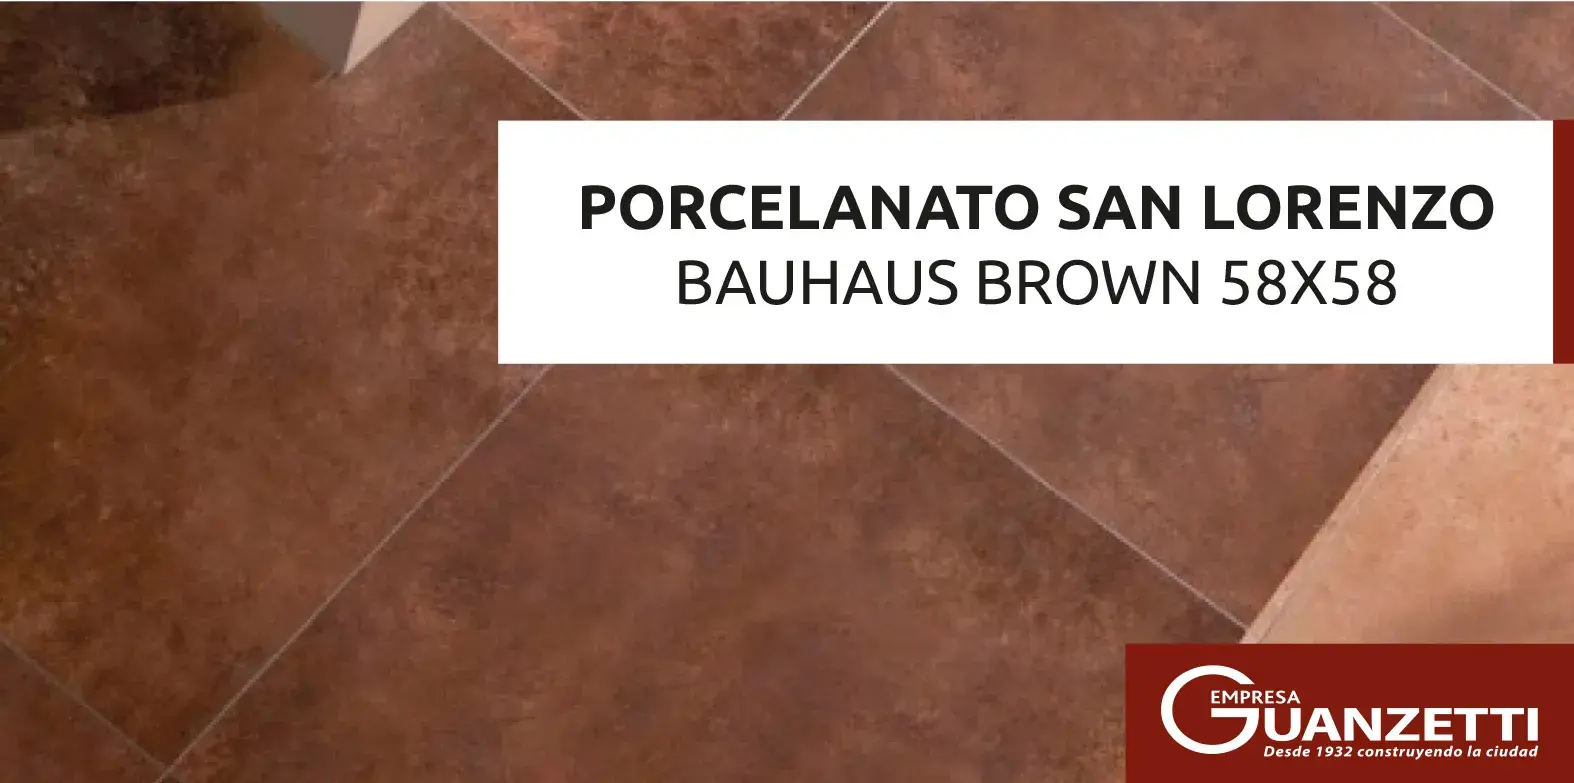 Porcelanato San Lorenzo Bauhaus Brown Rectificado 58X58